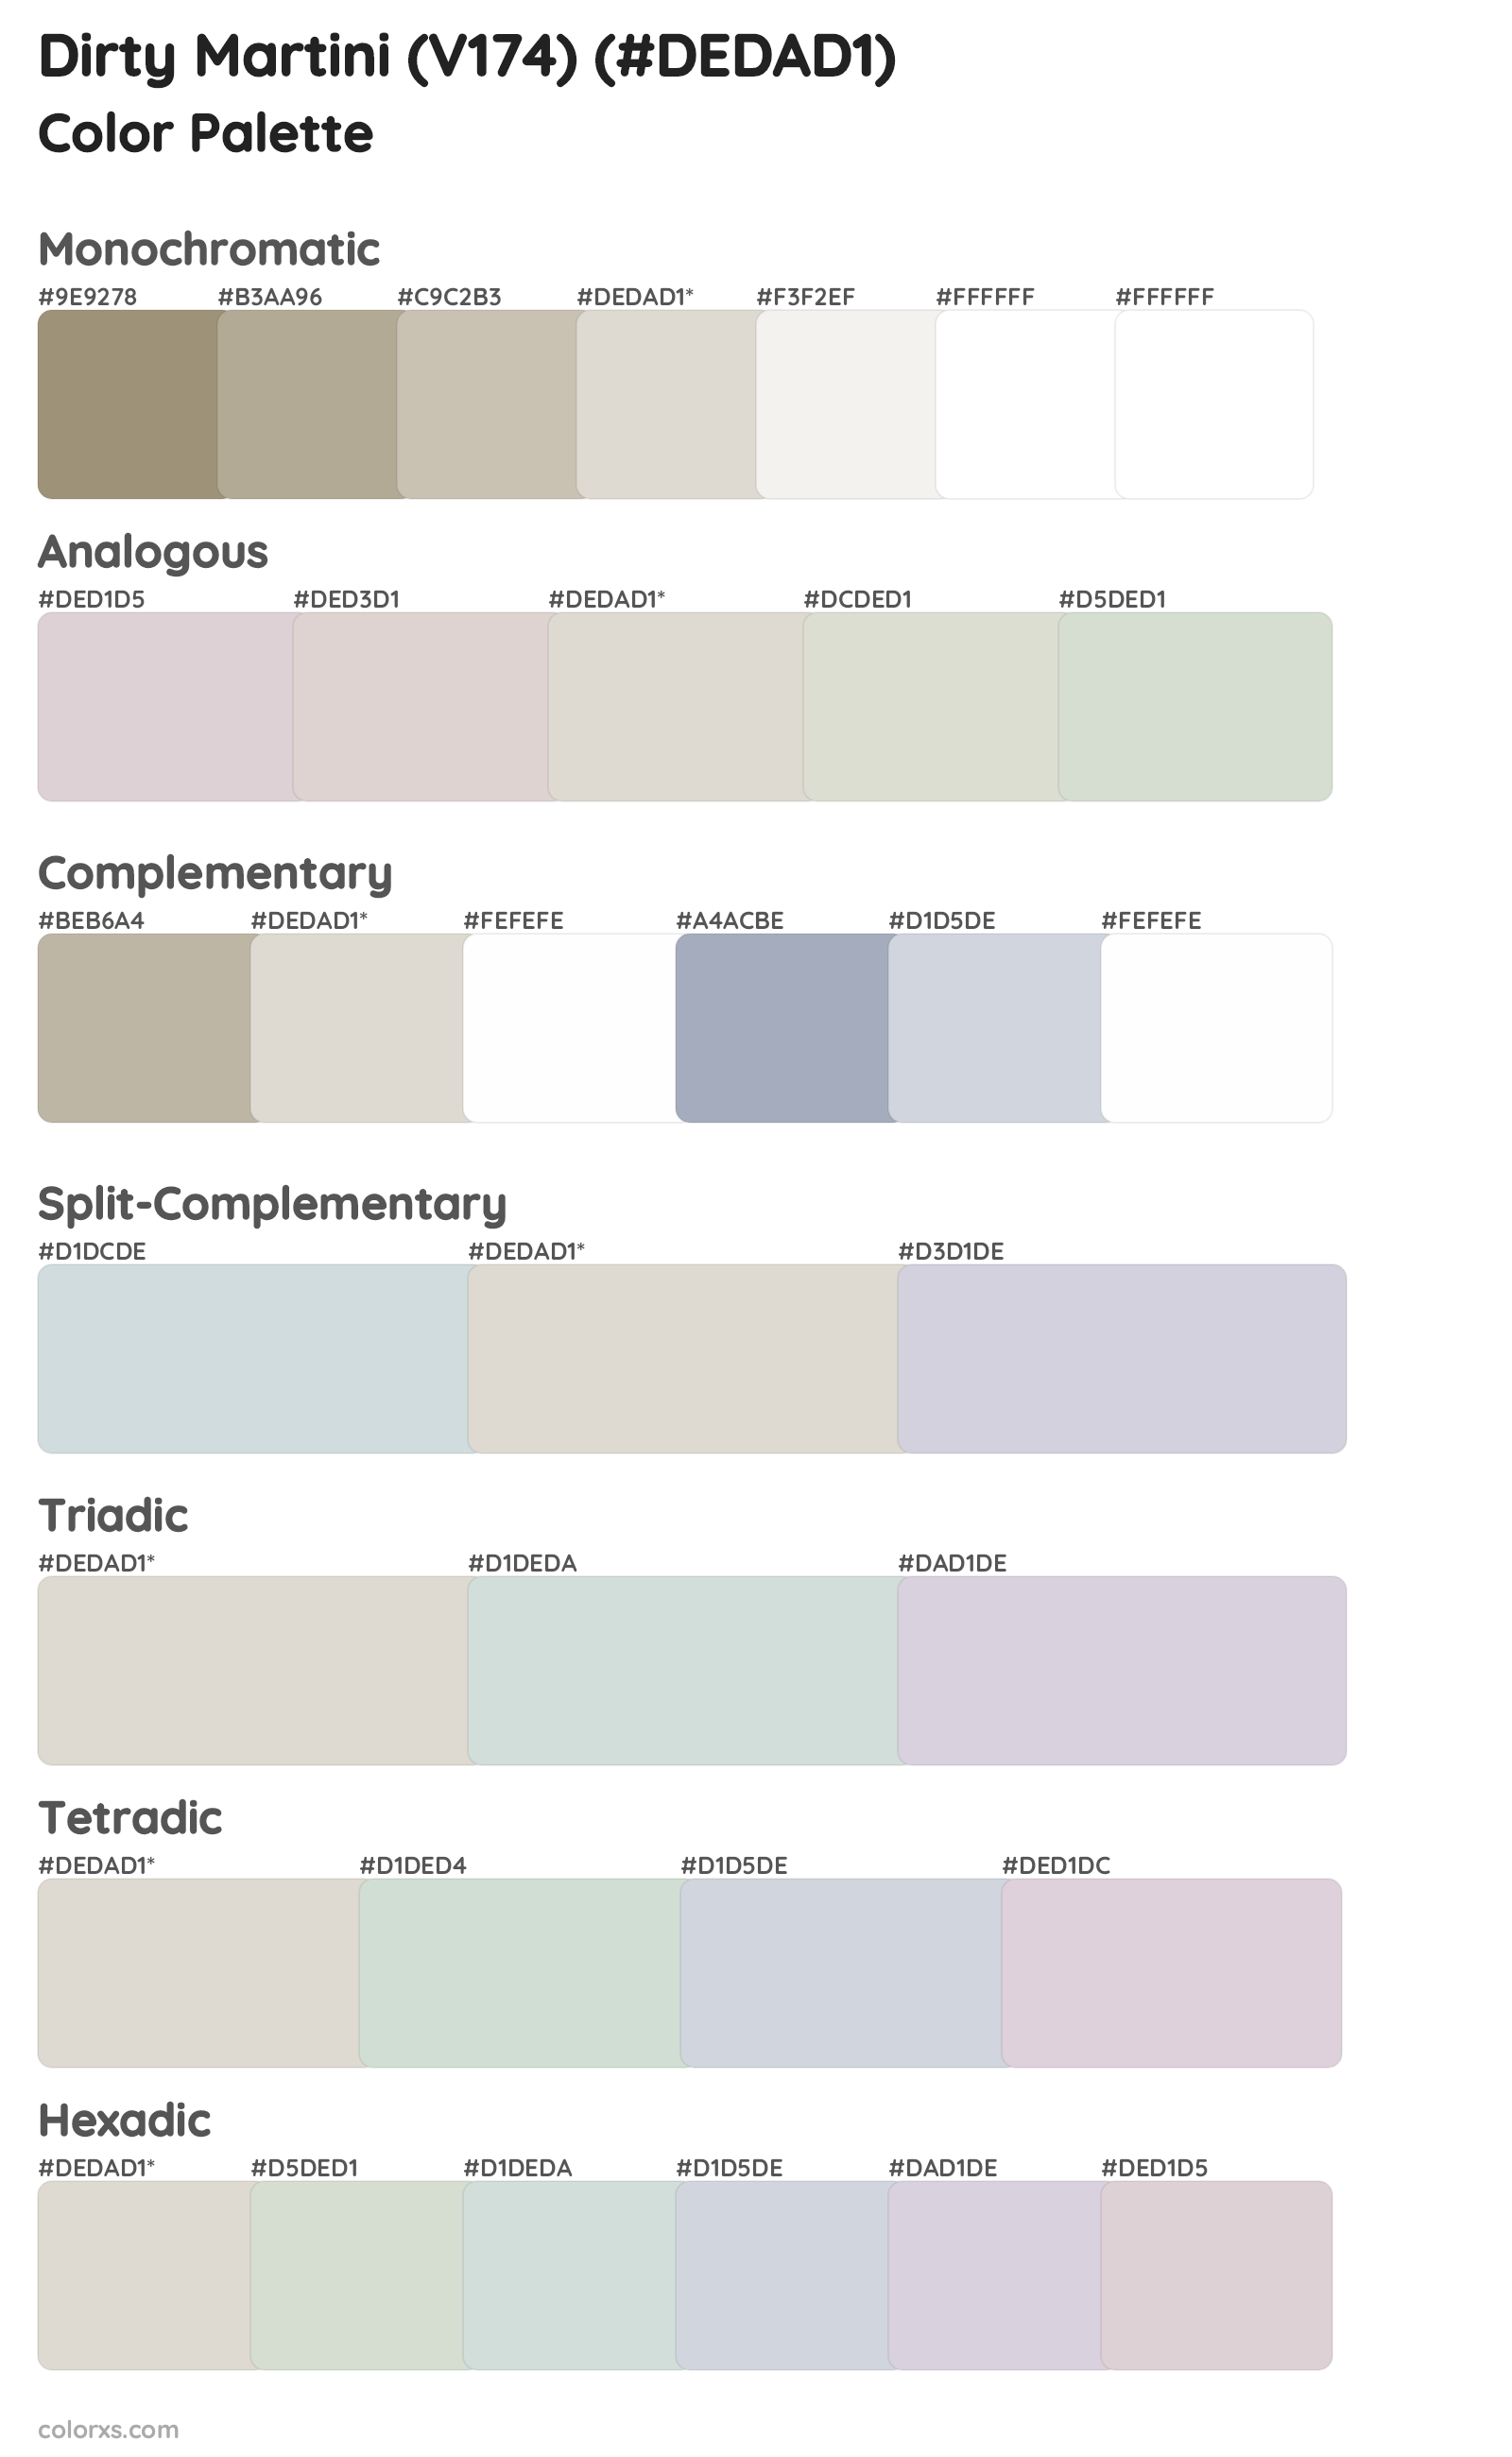 Dirty Martini (V174) Color Scheme Palettes